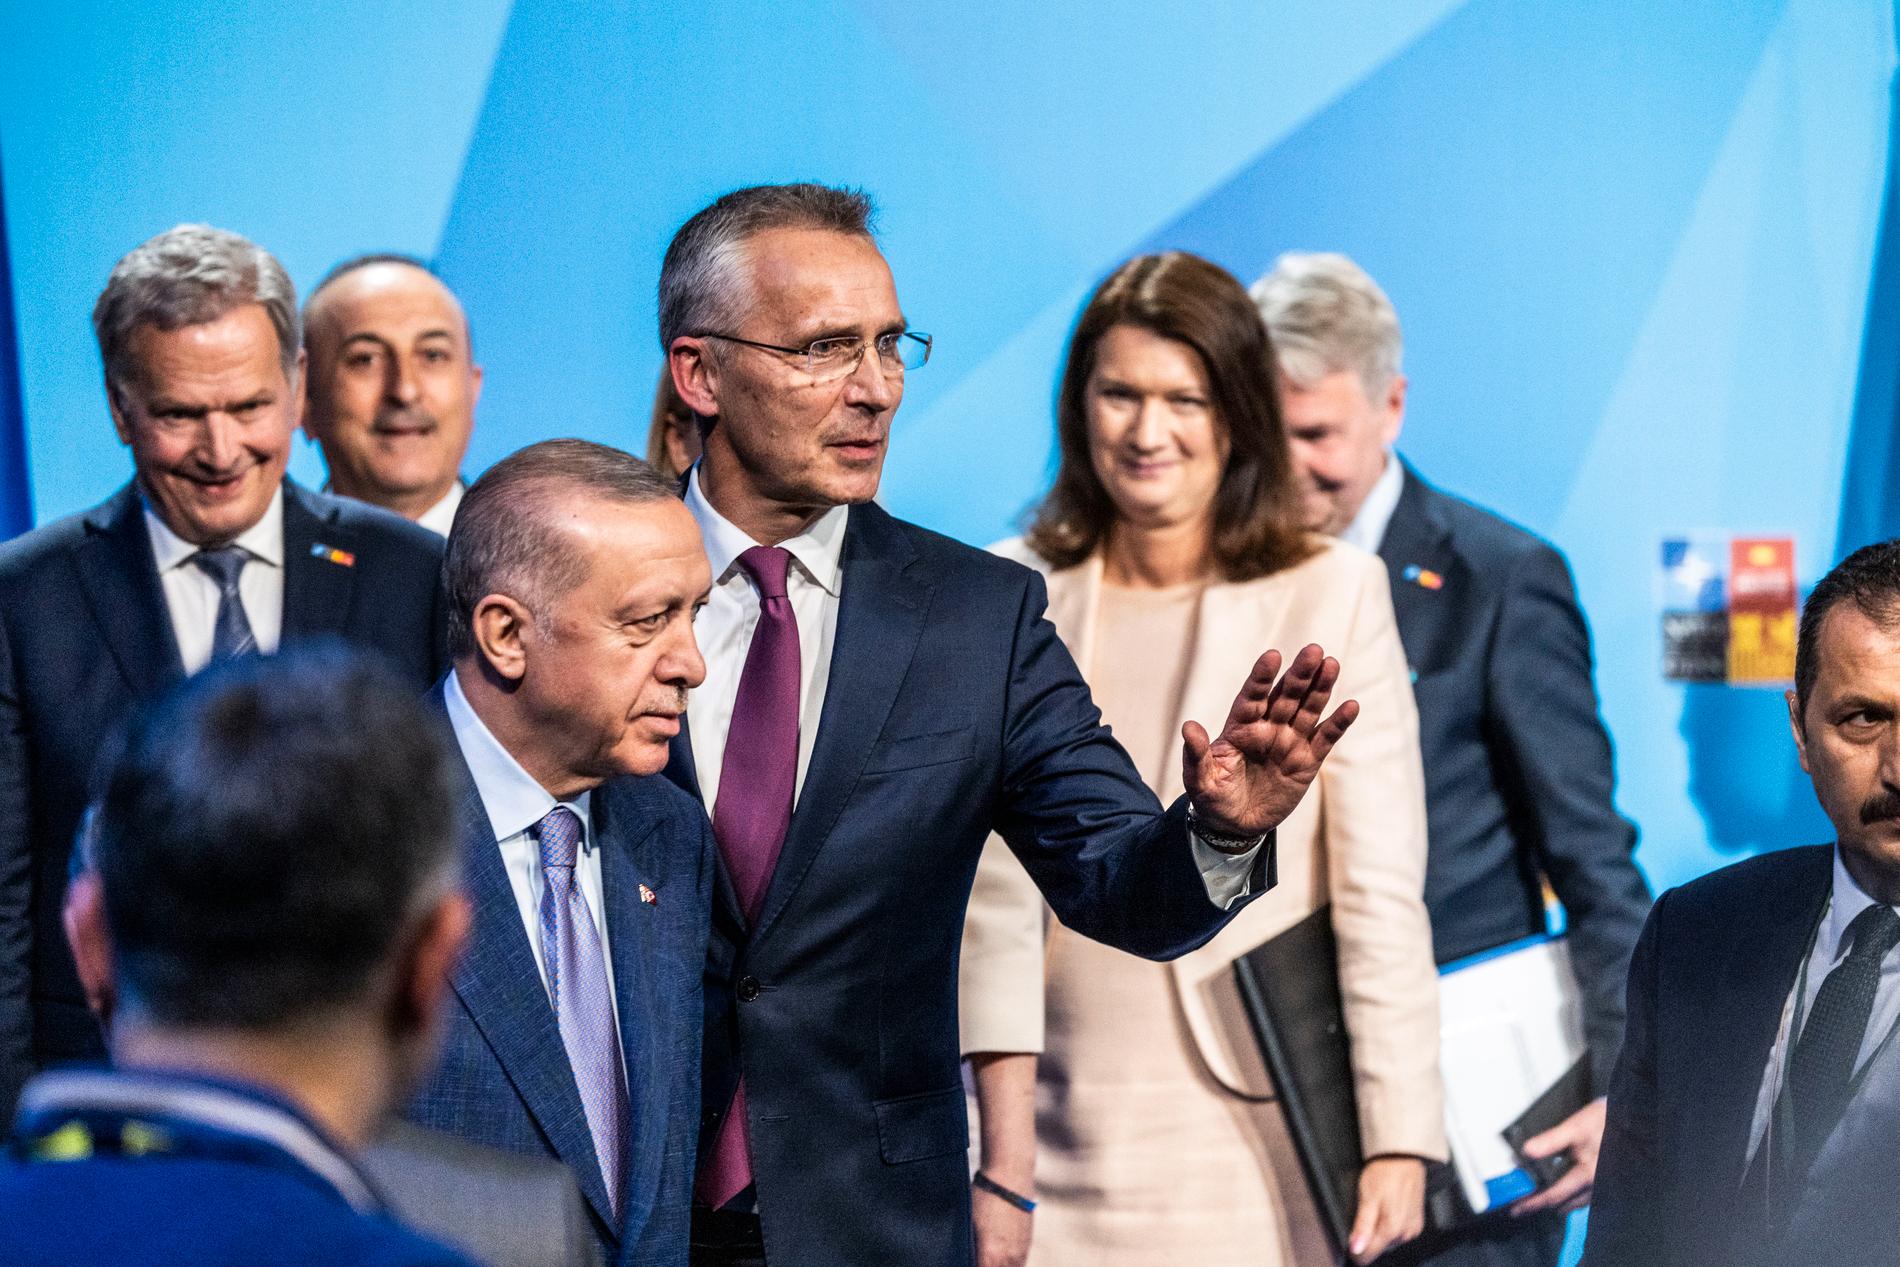 NATO Gens goes to Erdogan’s inauguration